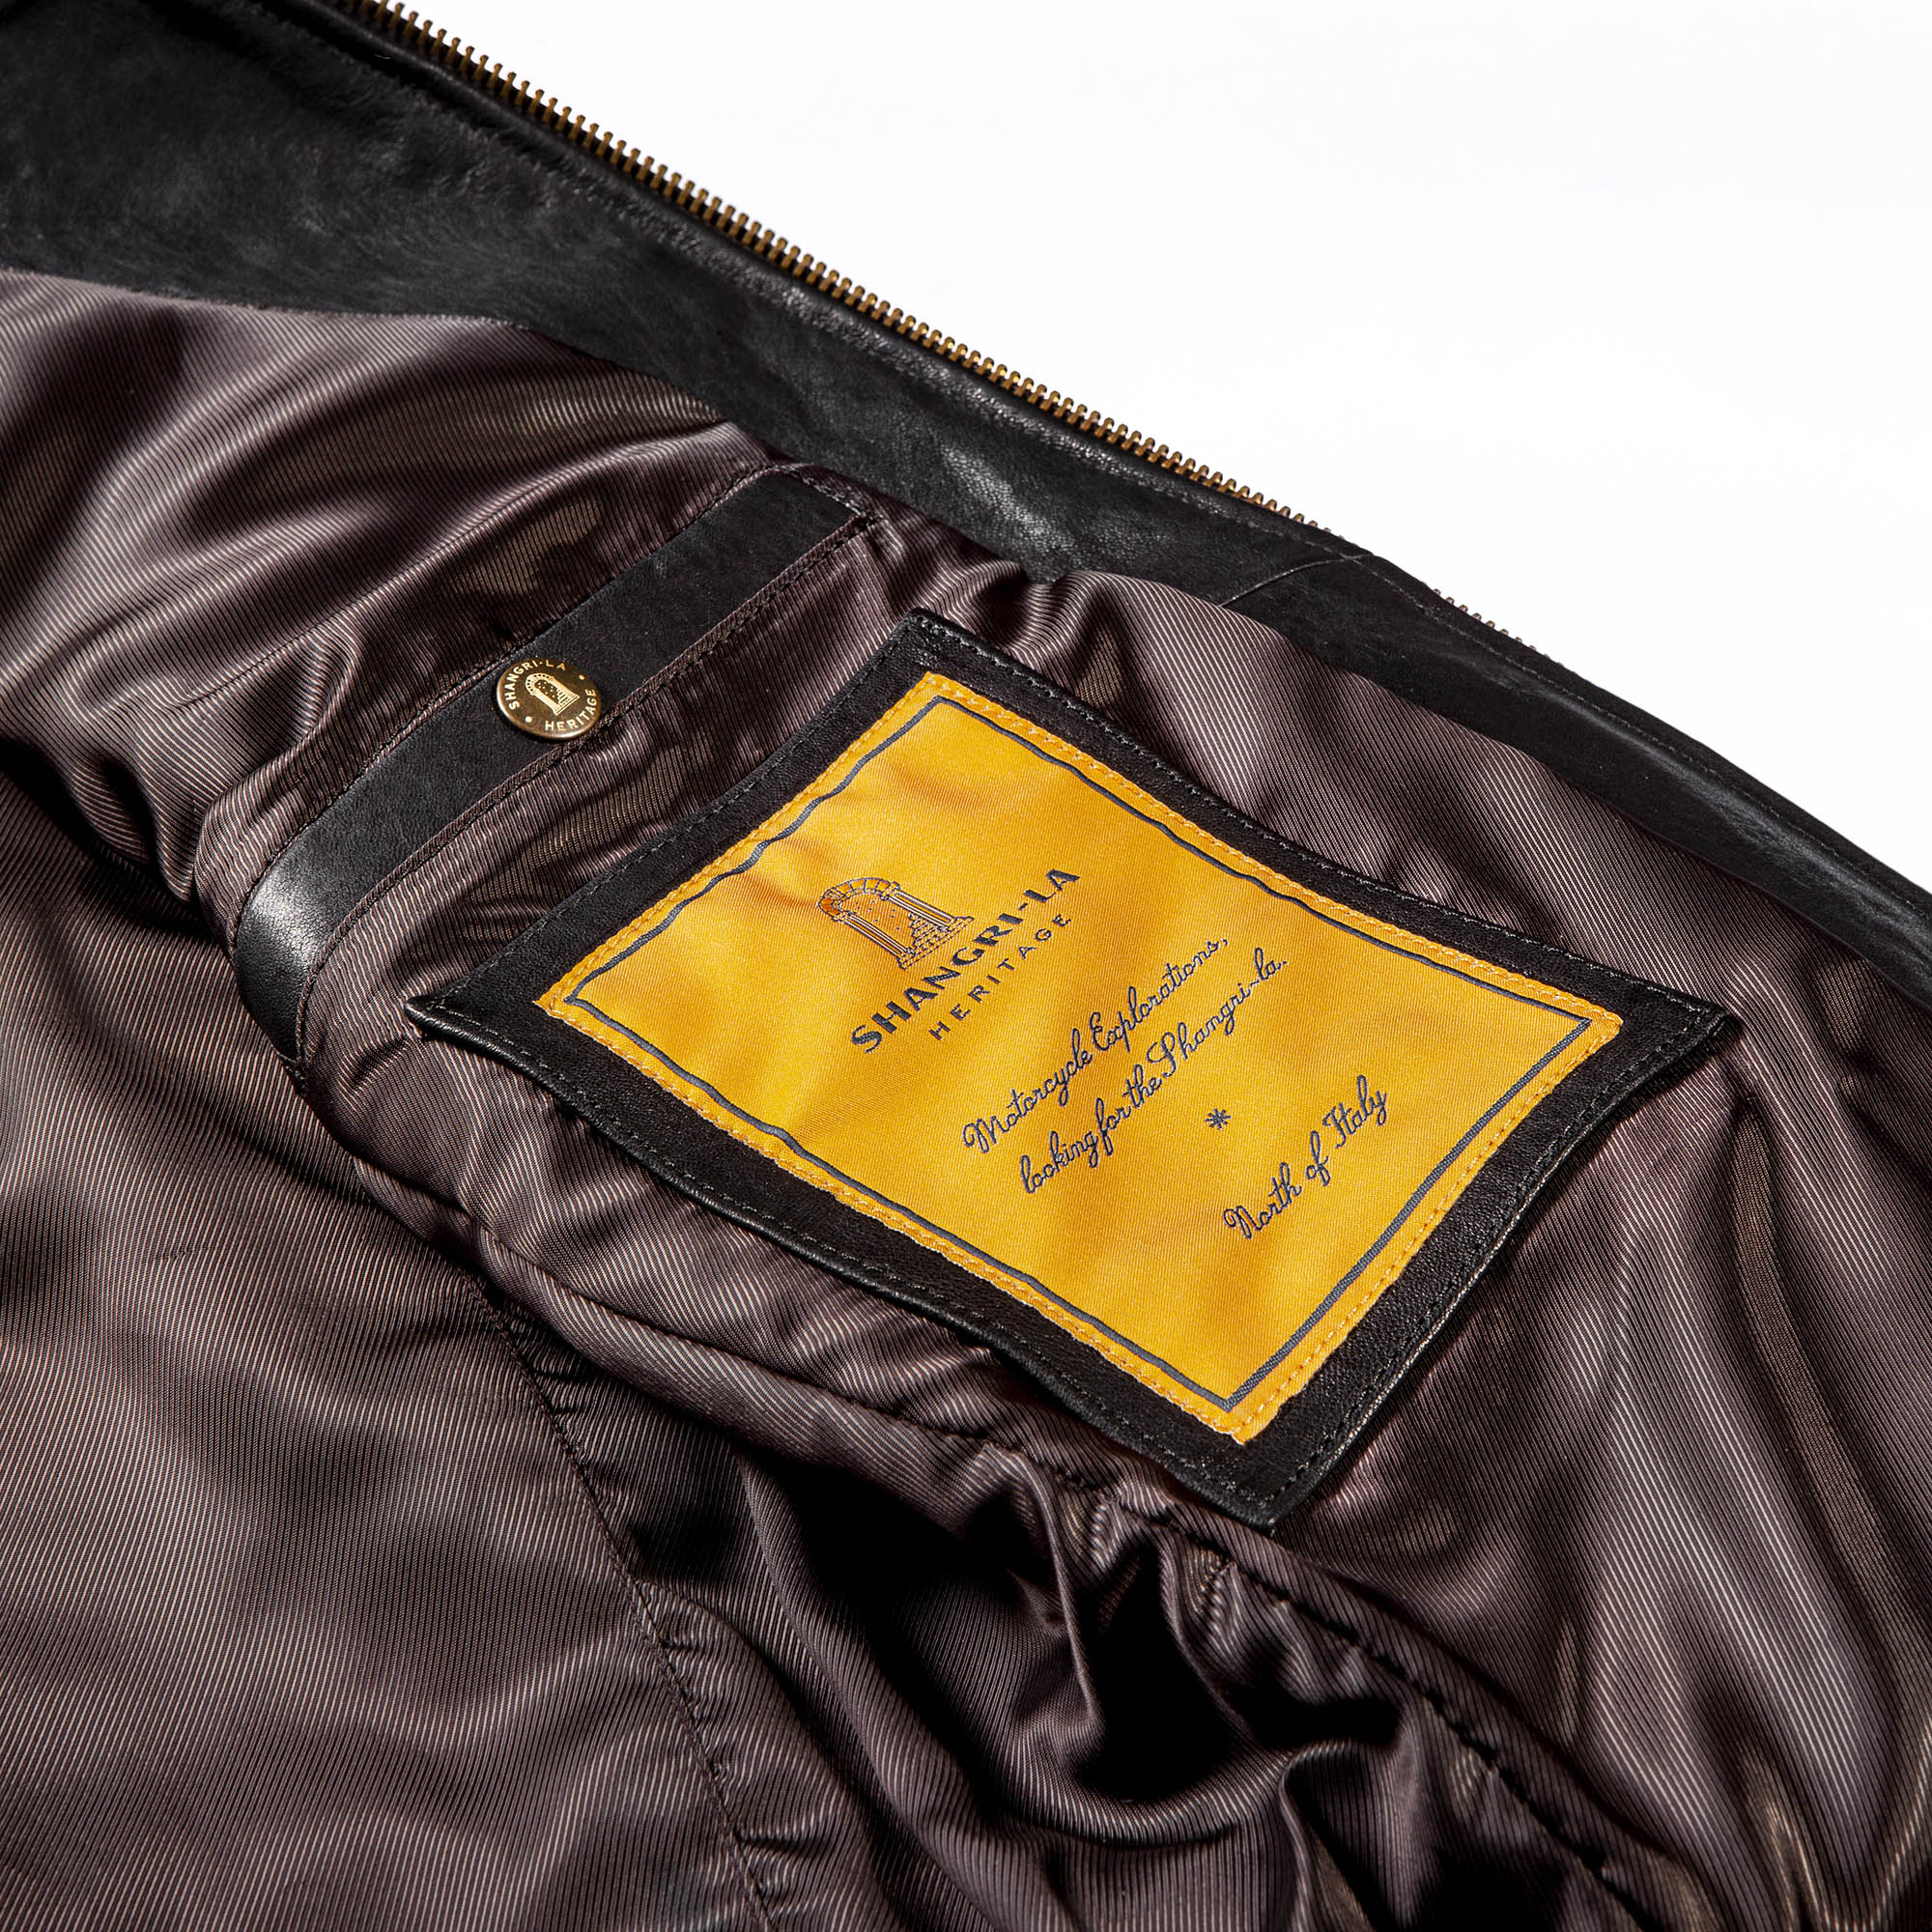 “Café Racer” Black Leather Jacket